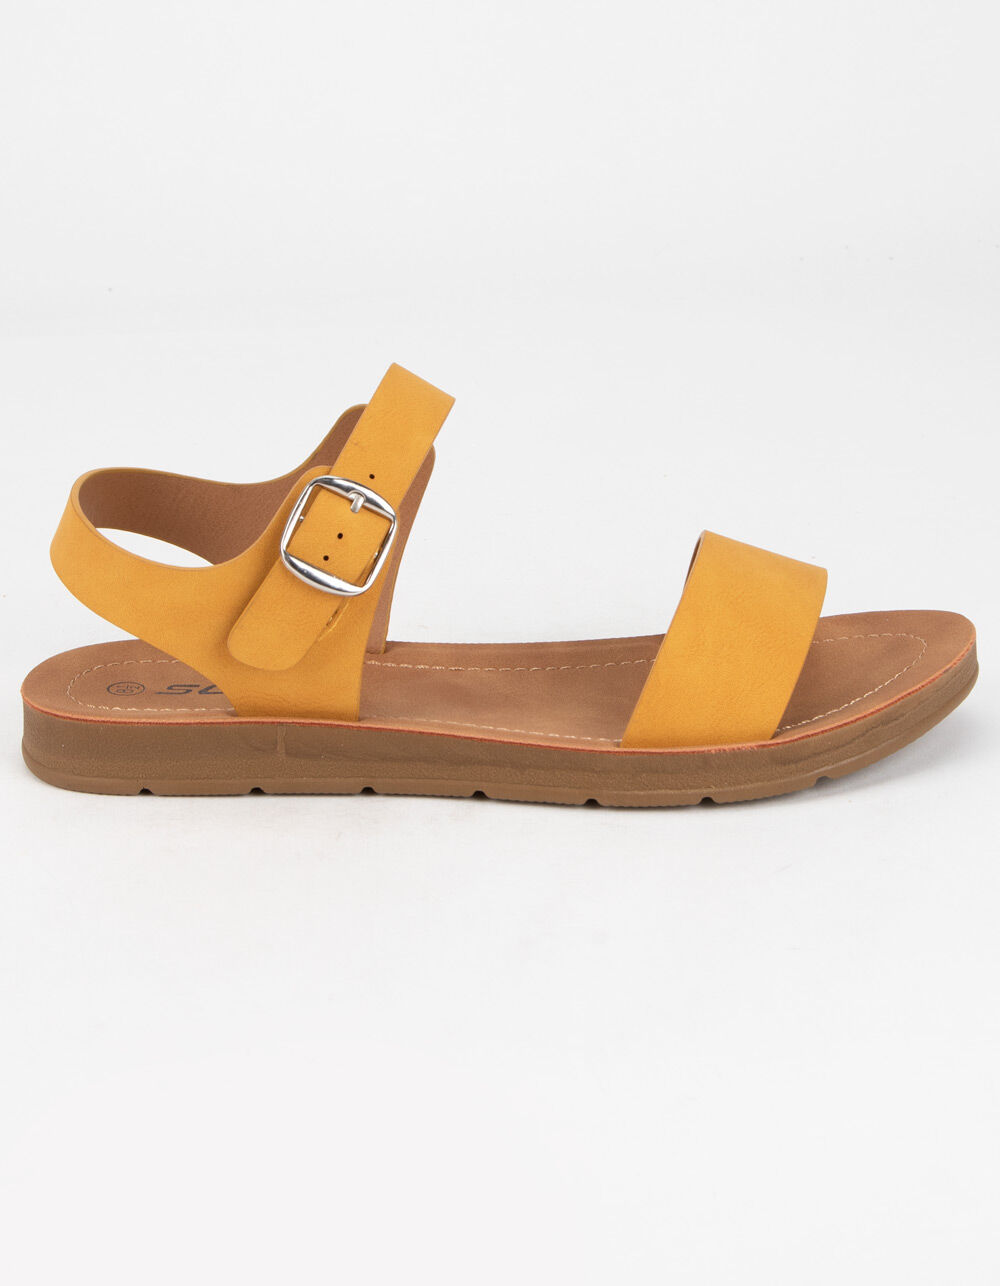 SODA Comfort Ankle Womens Mustard Sandals - MUSTARD | Tillys